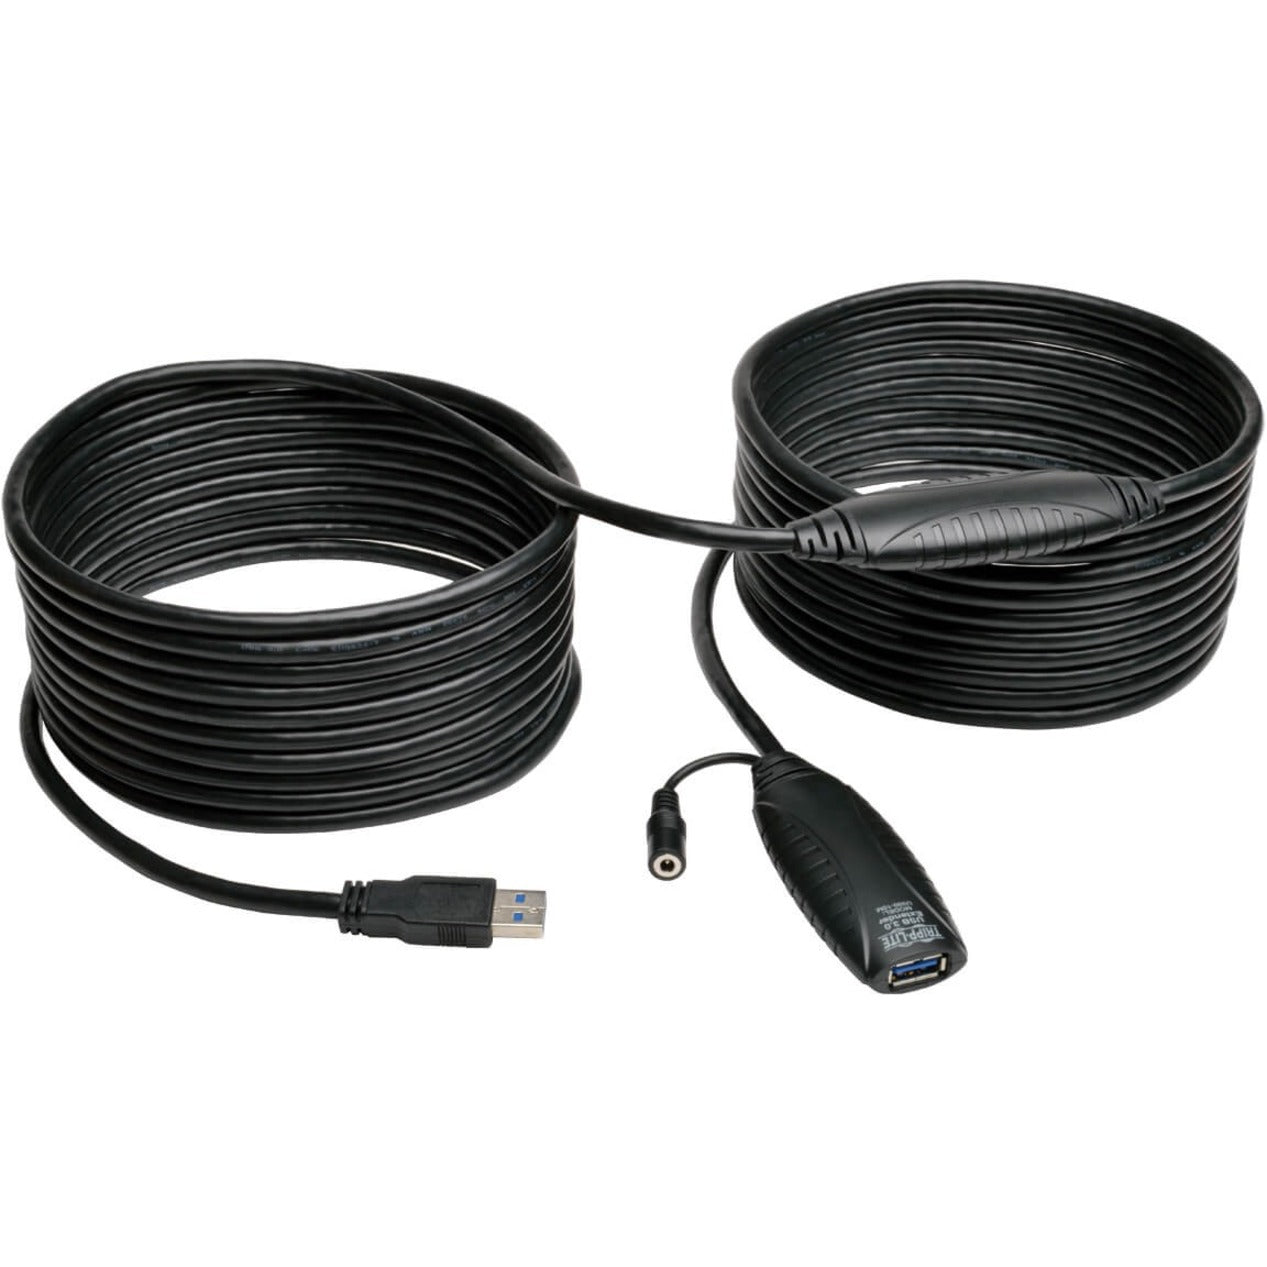 Tripp Lite U330-10M USB 3.0 SuperSpeed Cable de extensión activa repetidora (A M/F) 10M (33 pies) Conductor de cobre Gris. Marca: Tripp Lite. Traductor: Tripp Lite.